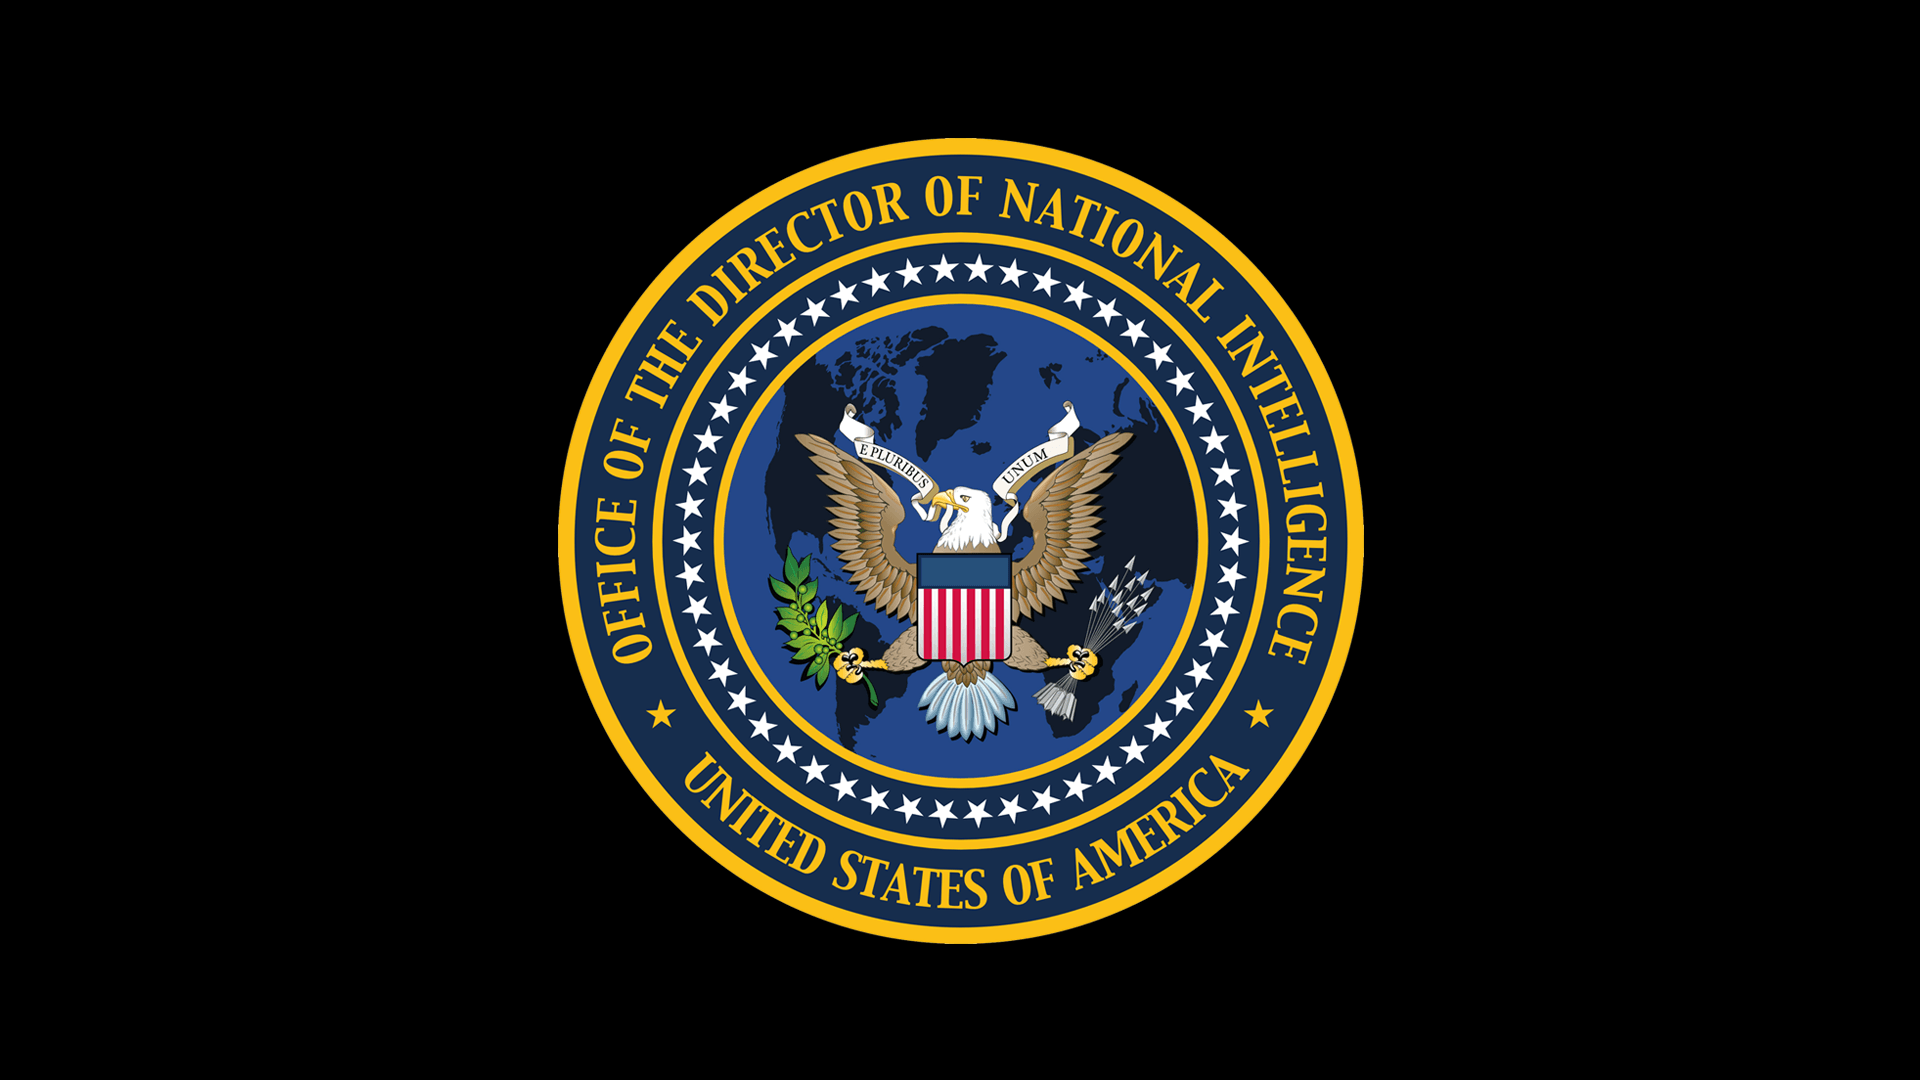 National Security Agency Wallpaper .wallpaperbat.com